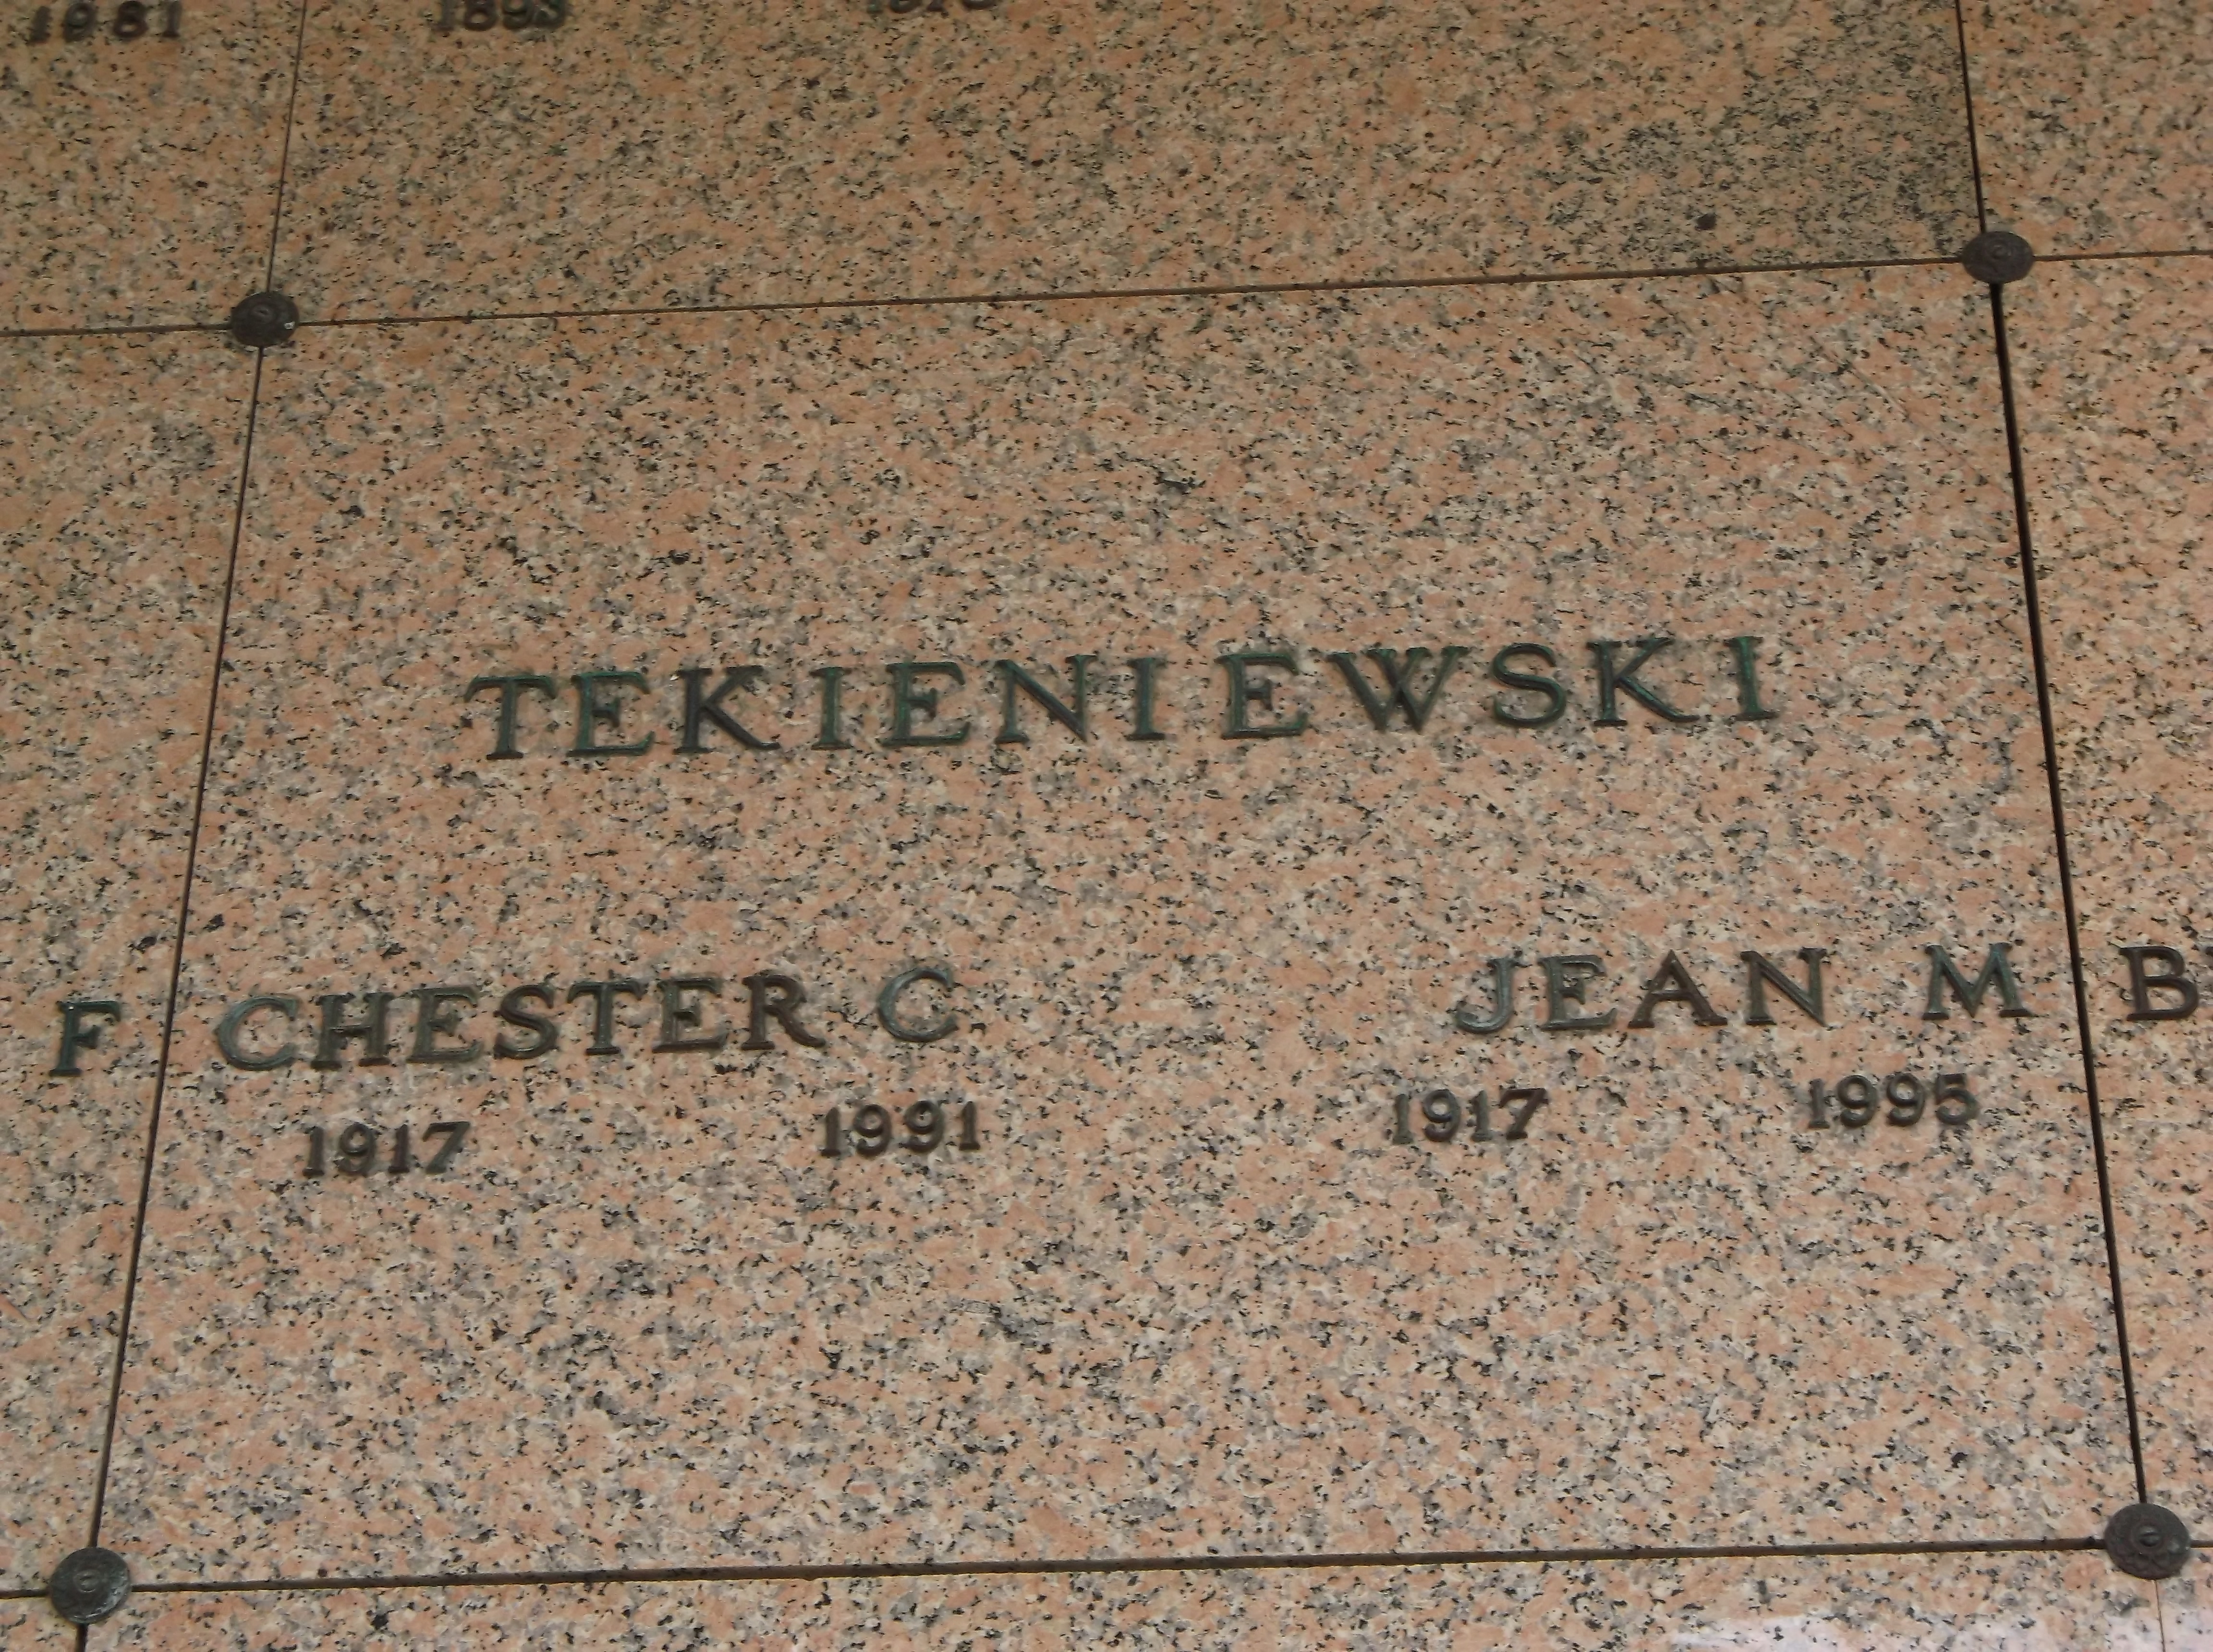 Chester C Tekieniewski